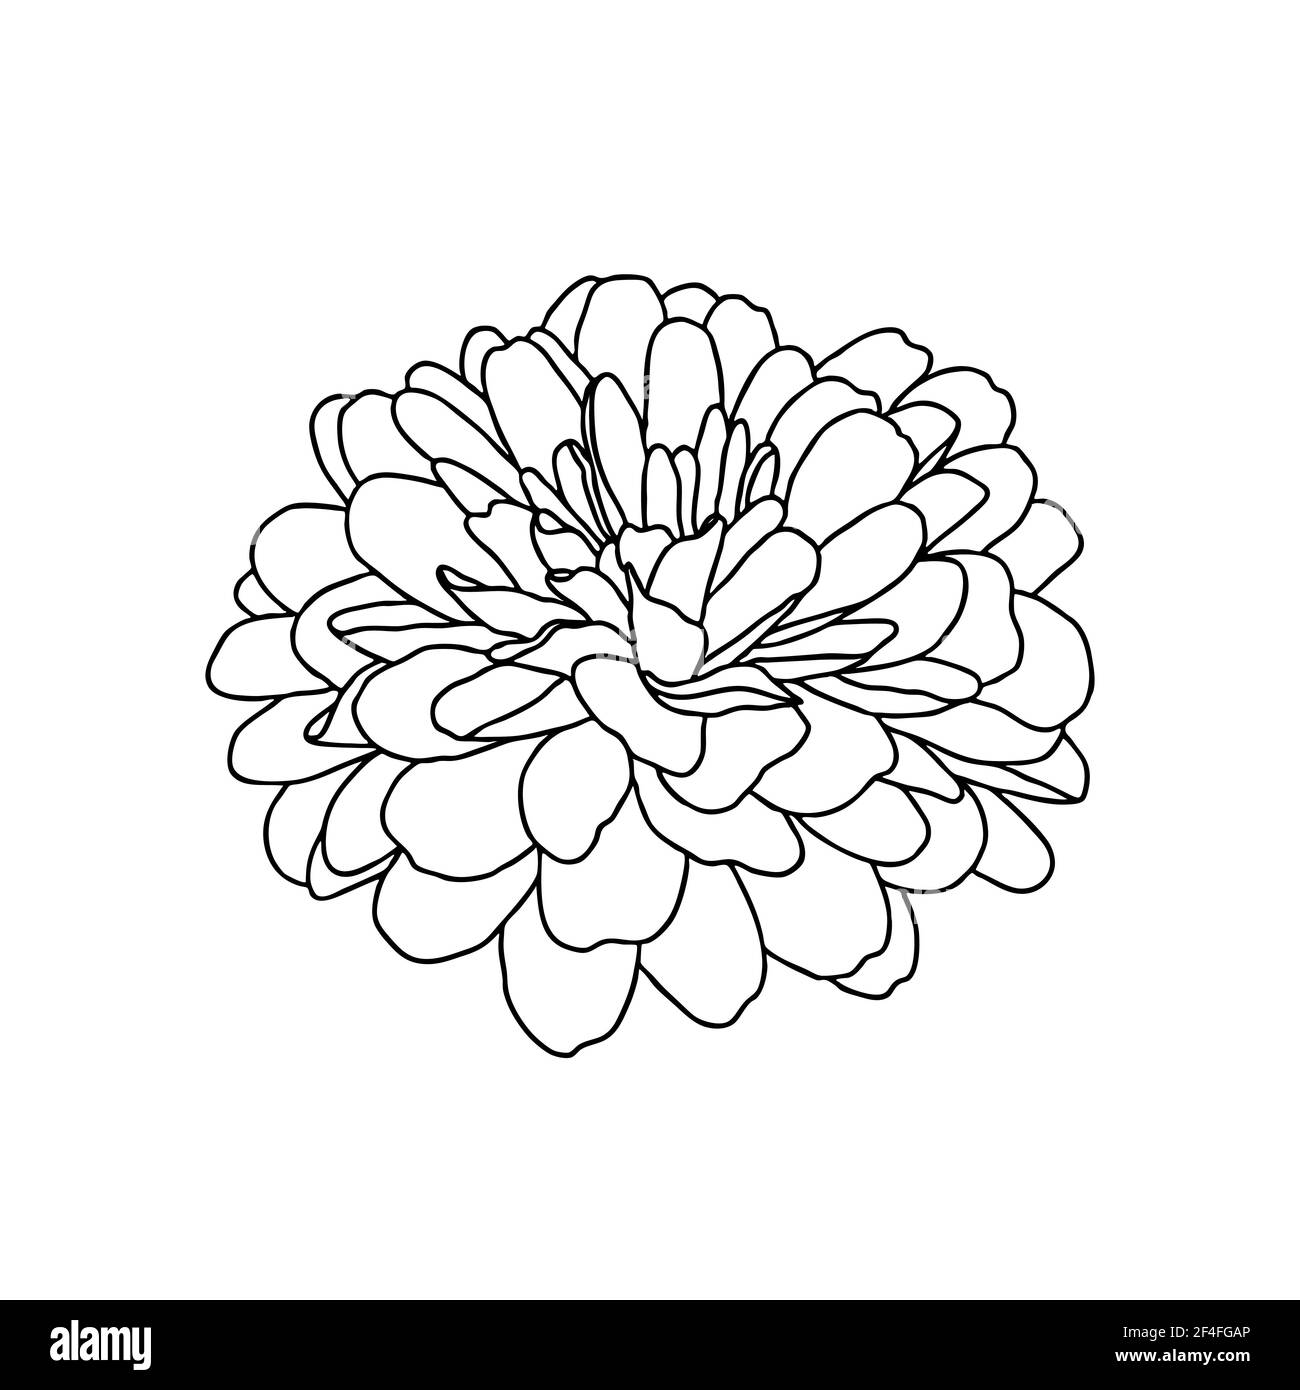 Minimalist Simple Chrysanthemum Tattoo, Outline Dahlia Flower Vector Art,  Simple Dhaba Flower Illustration Stock Vector - Illustration of  chrysanthemum, white: 278403437